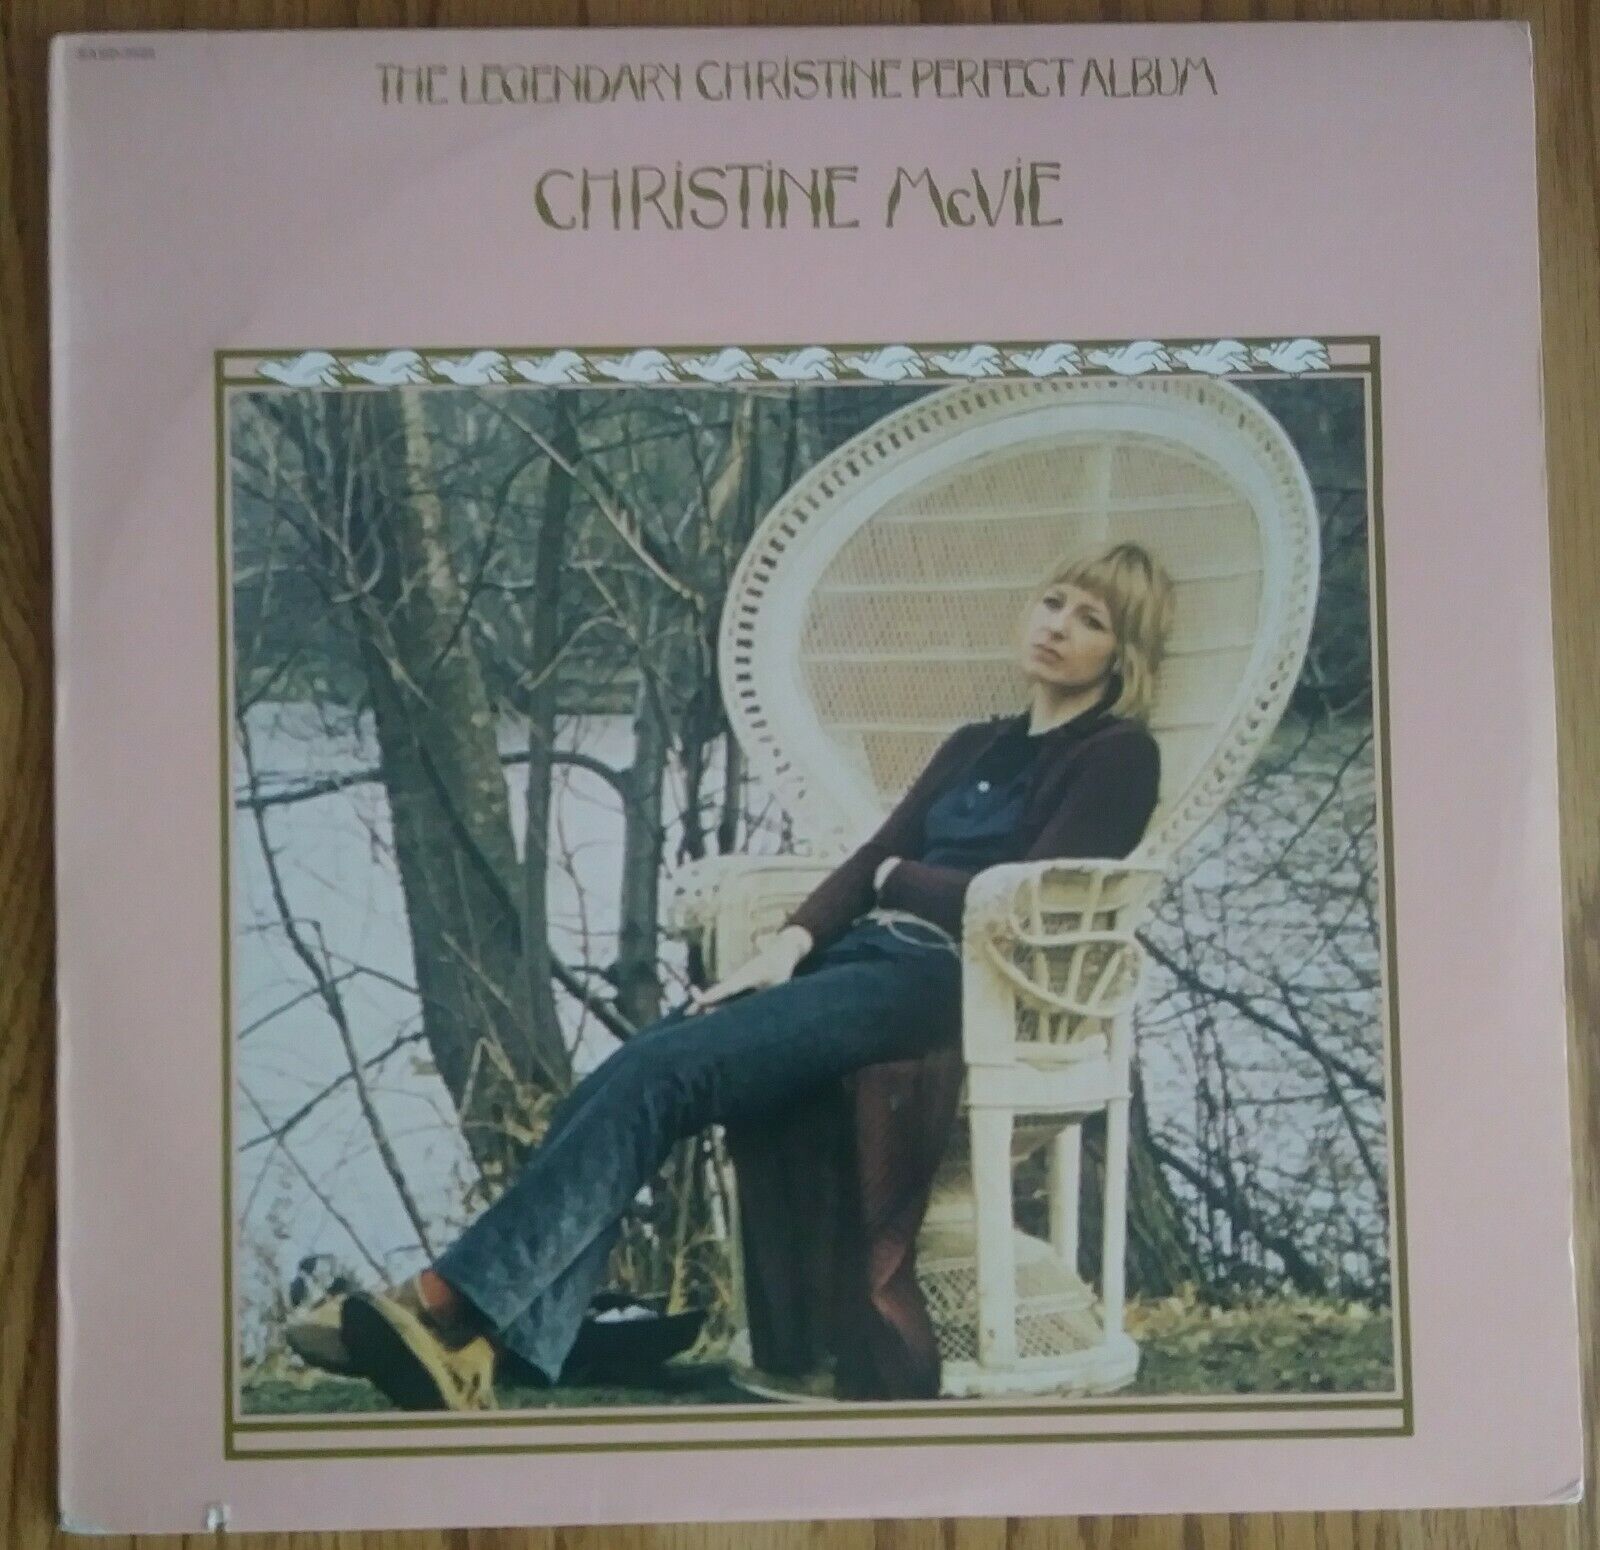 CHRISTINE MCVIE - THE LEGENDARY CHRISTINE PERFECT ALBUM - 1976 SIRE LP (VG+/VG+)